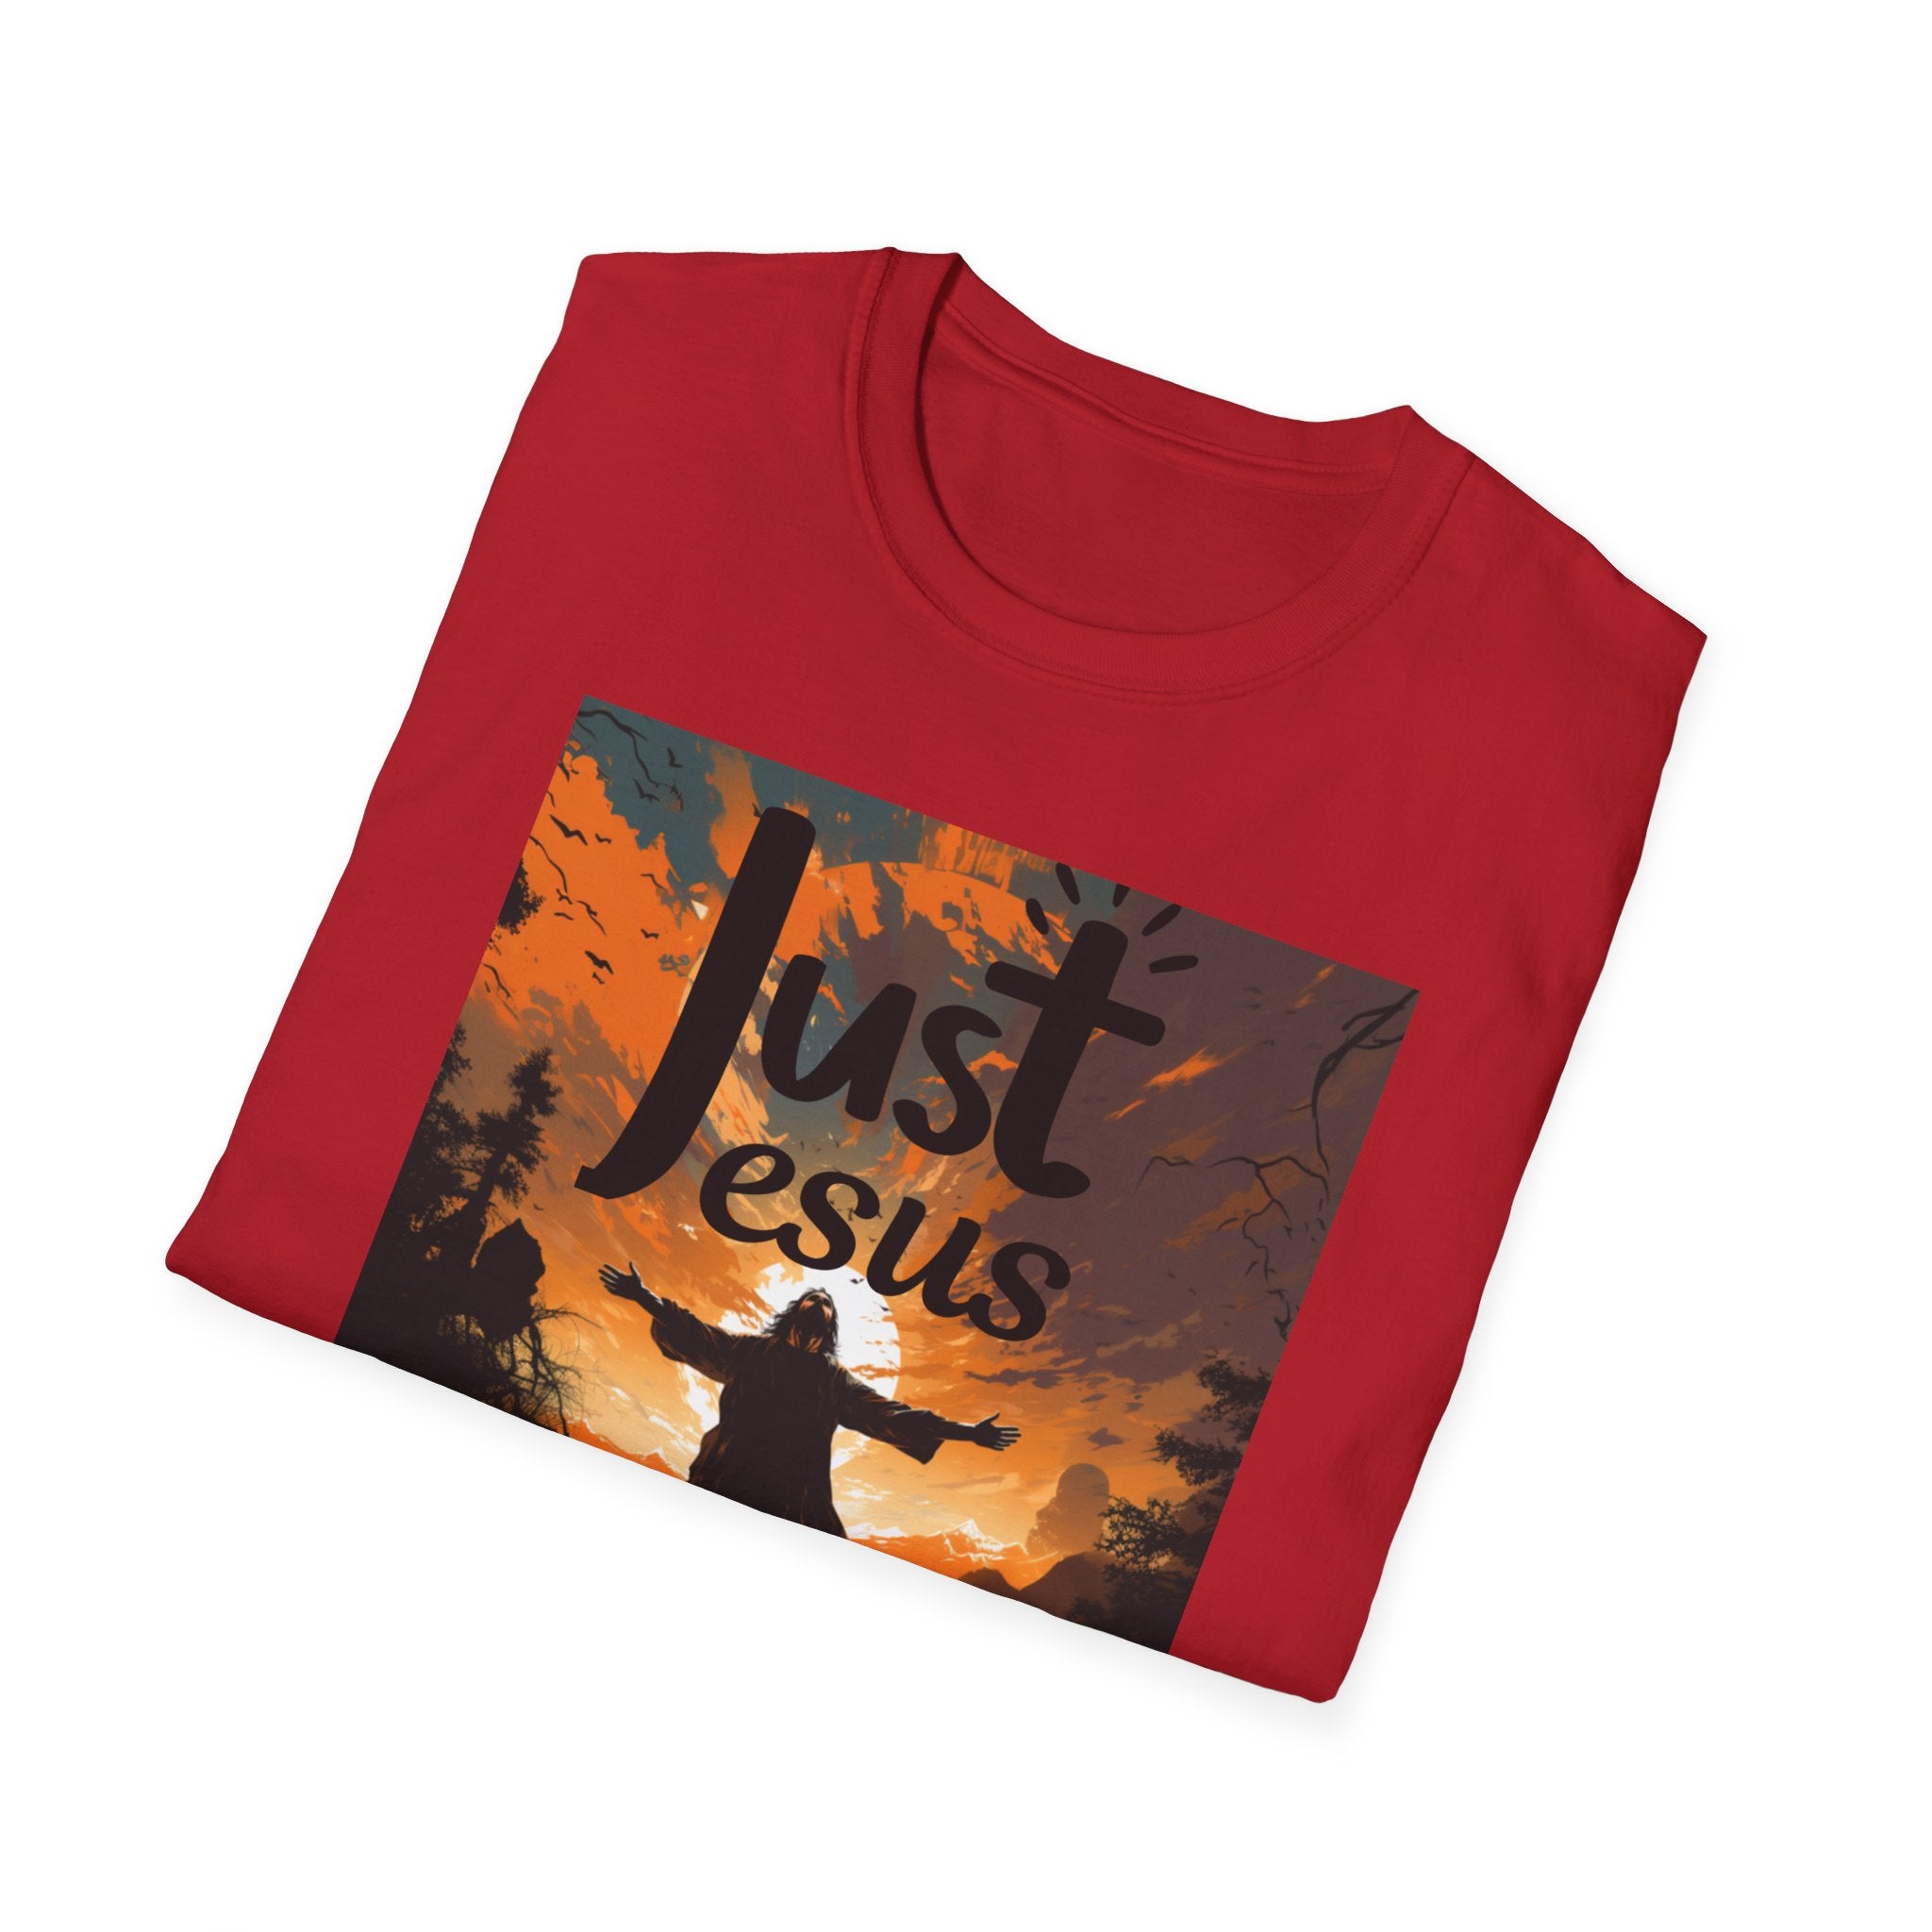 Just Jesus Unisex Softstyle T-Shirt